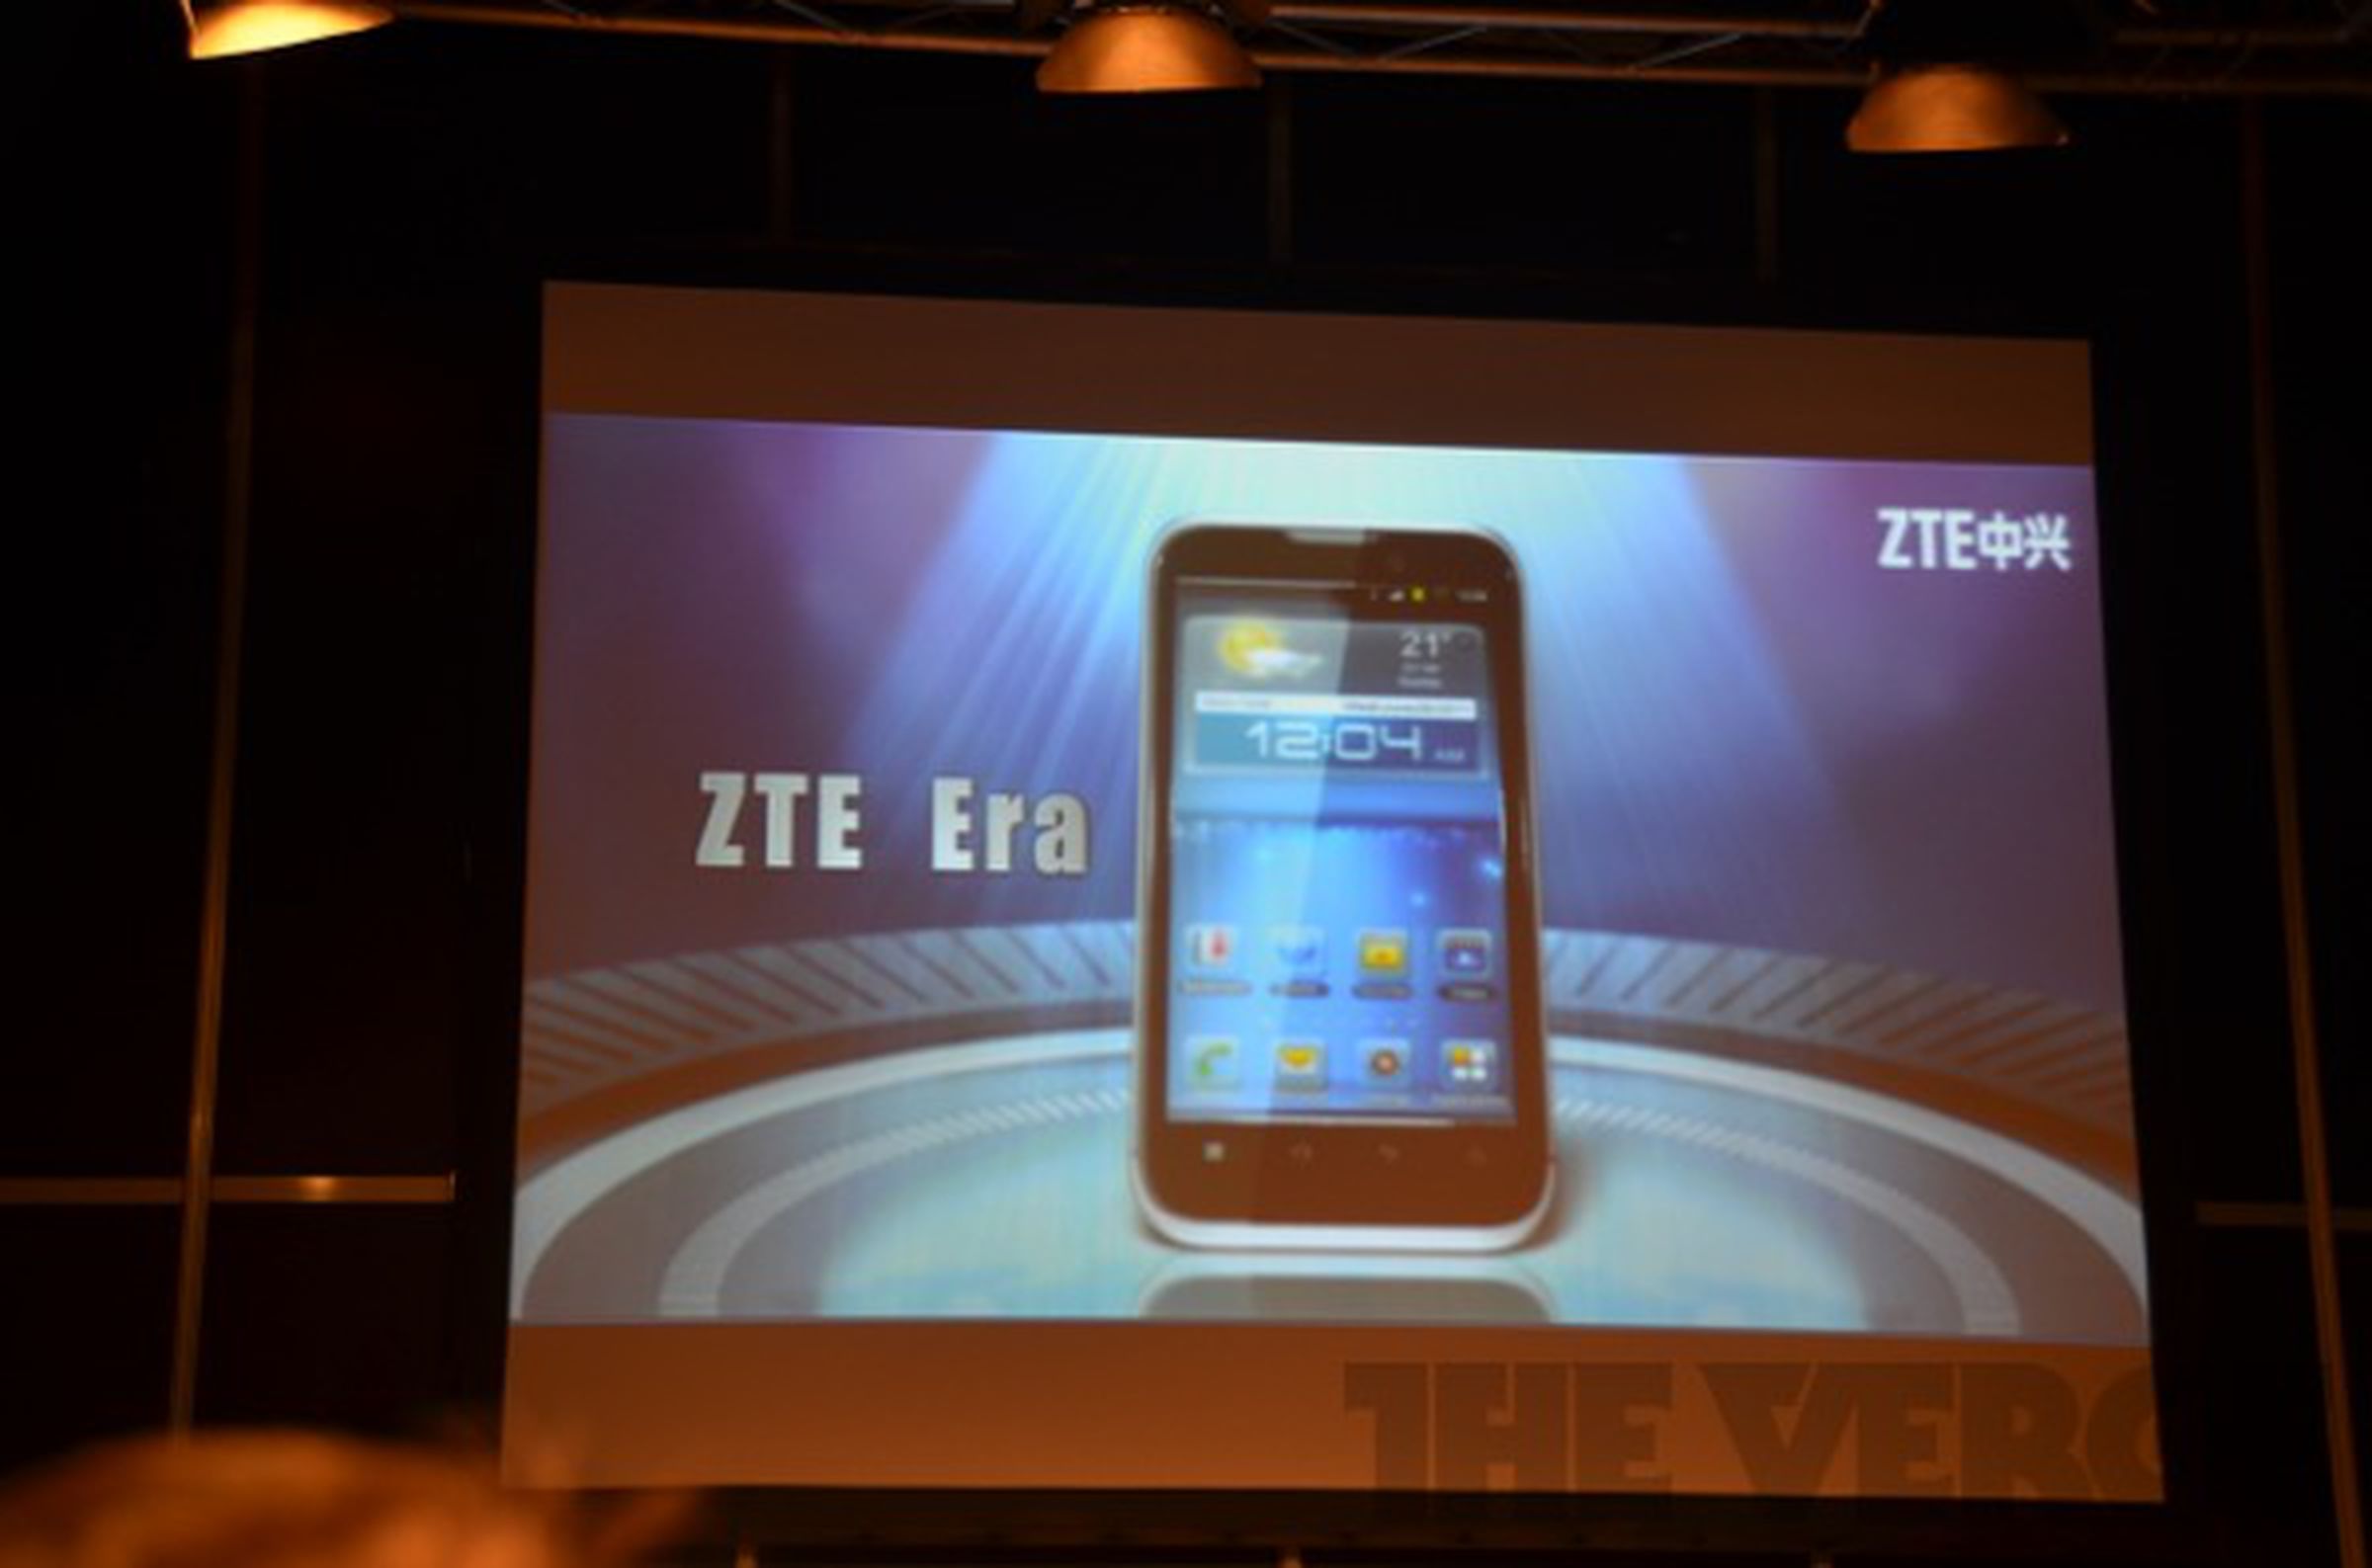 ZTE Era announcement images